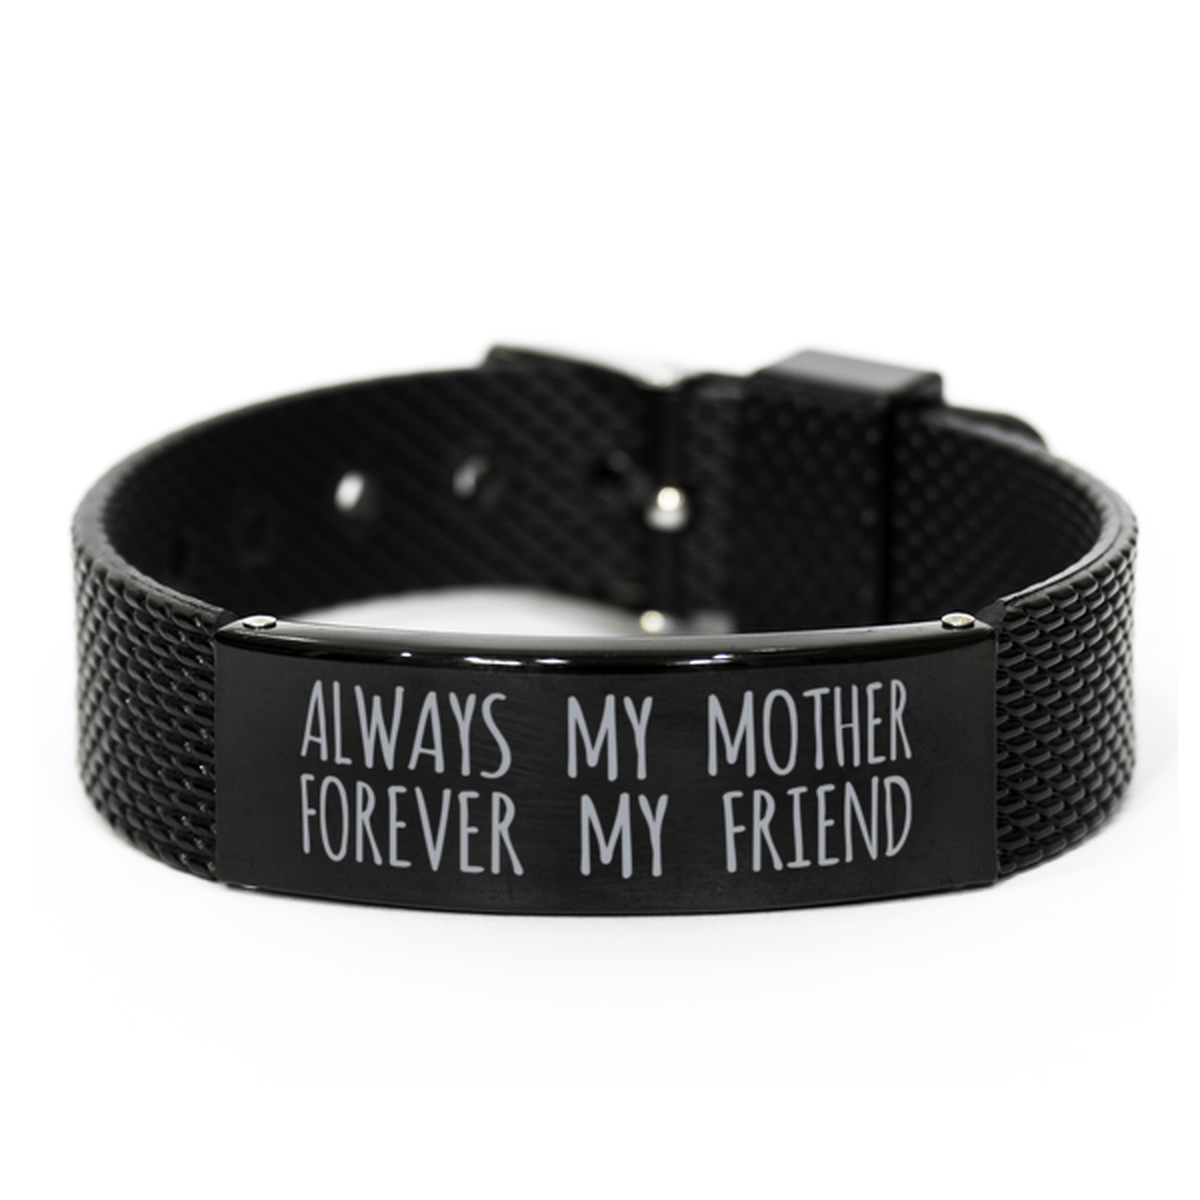 Inspirational Mother Black Shark Mesh Bracelet, Always My Mother Forever My Friend, Best Birthday Gifts for Family Friends